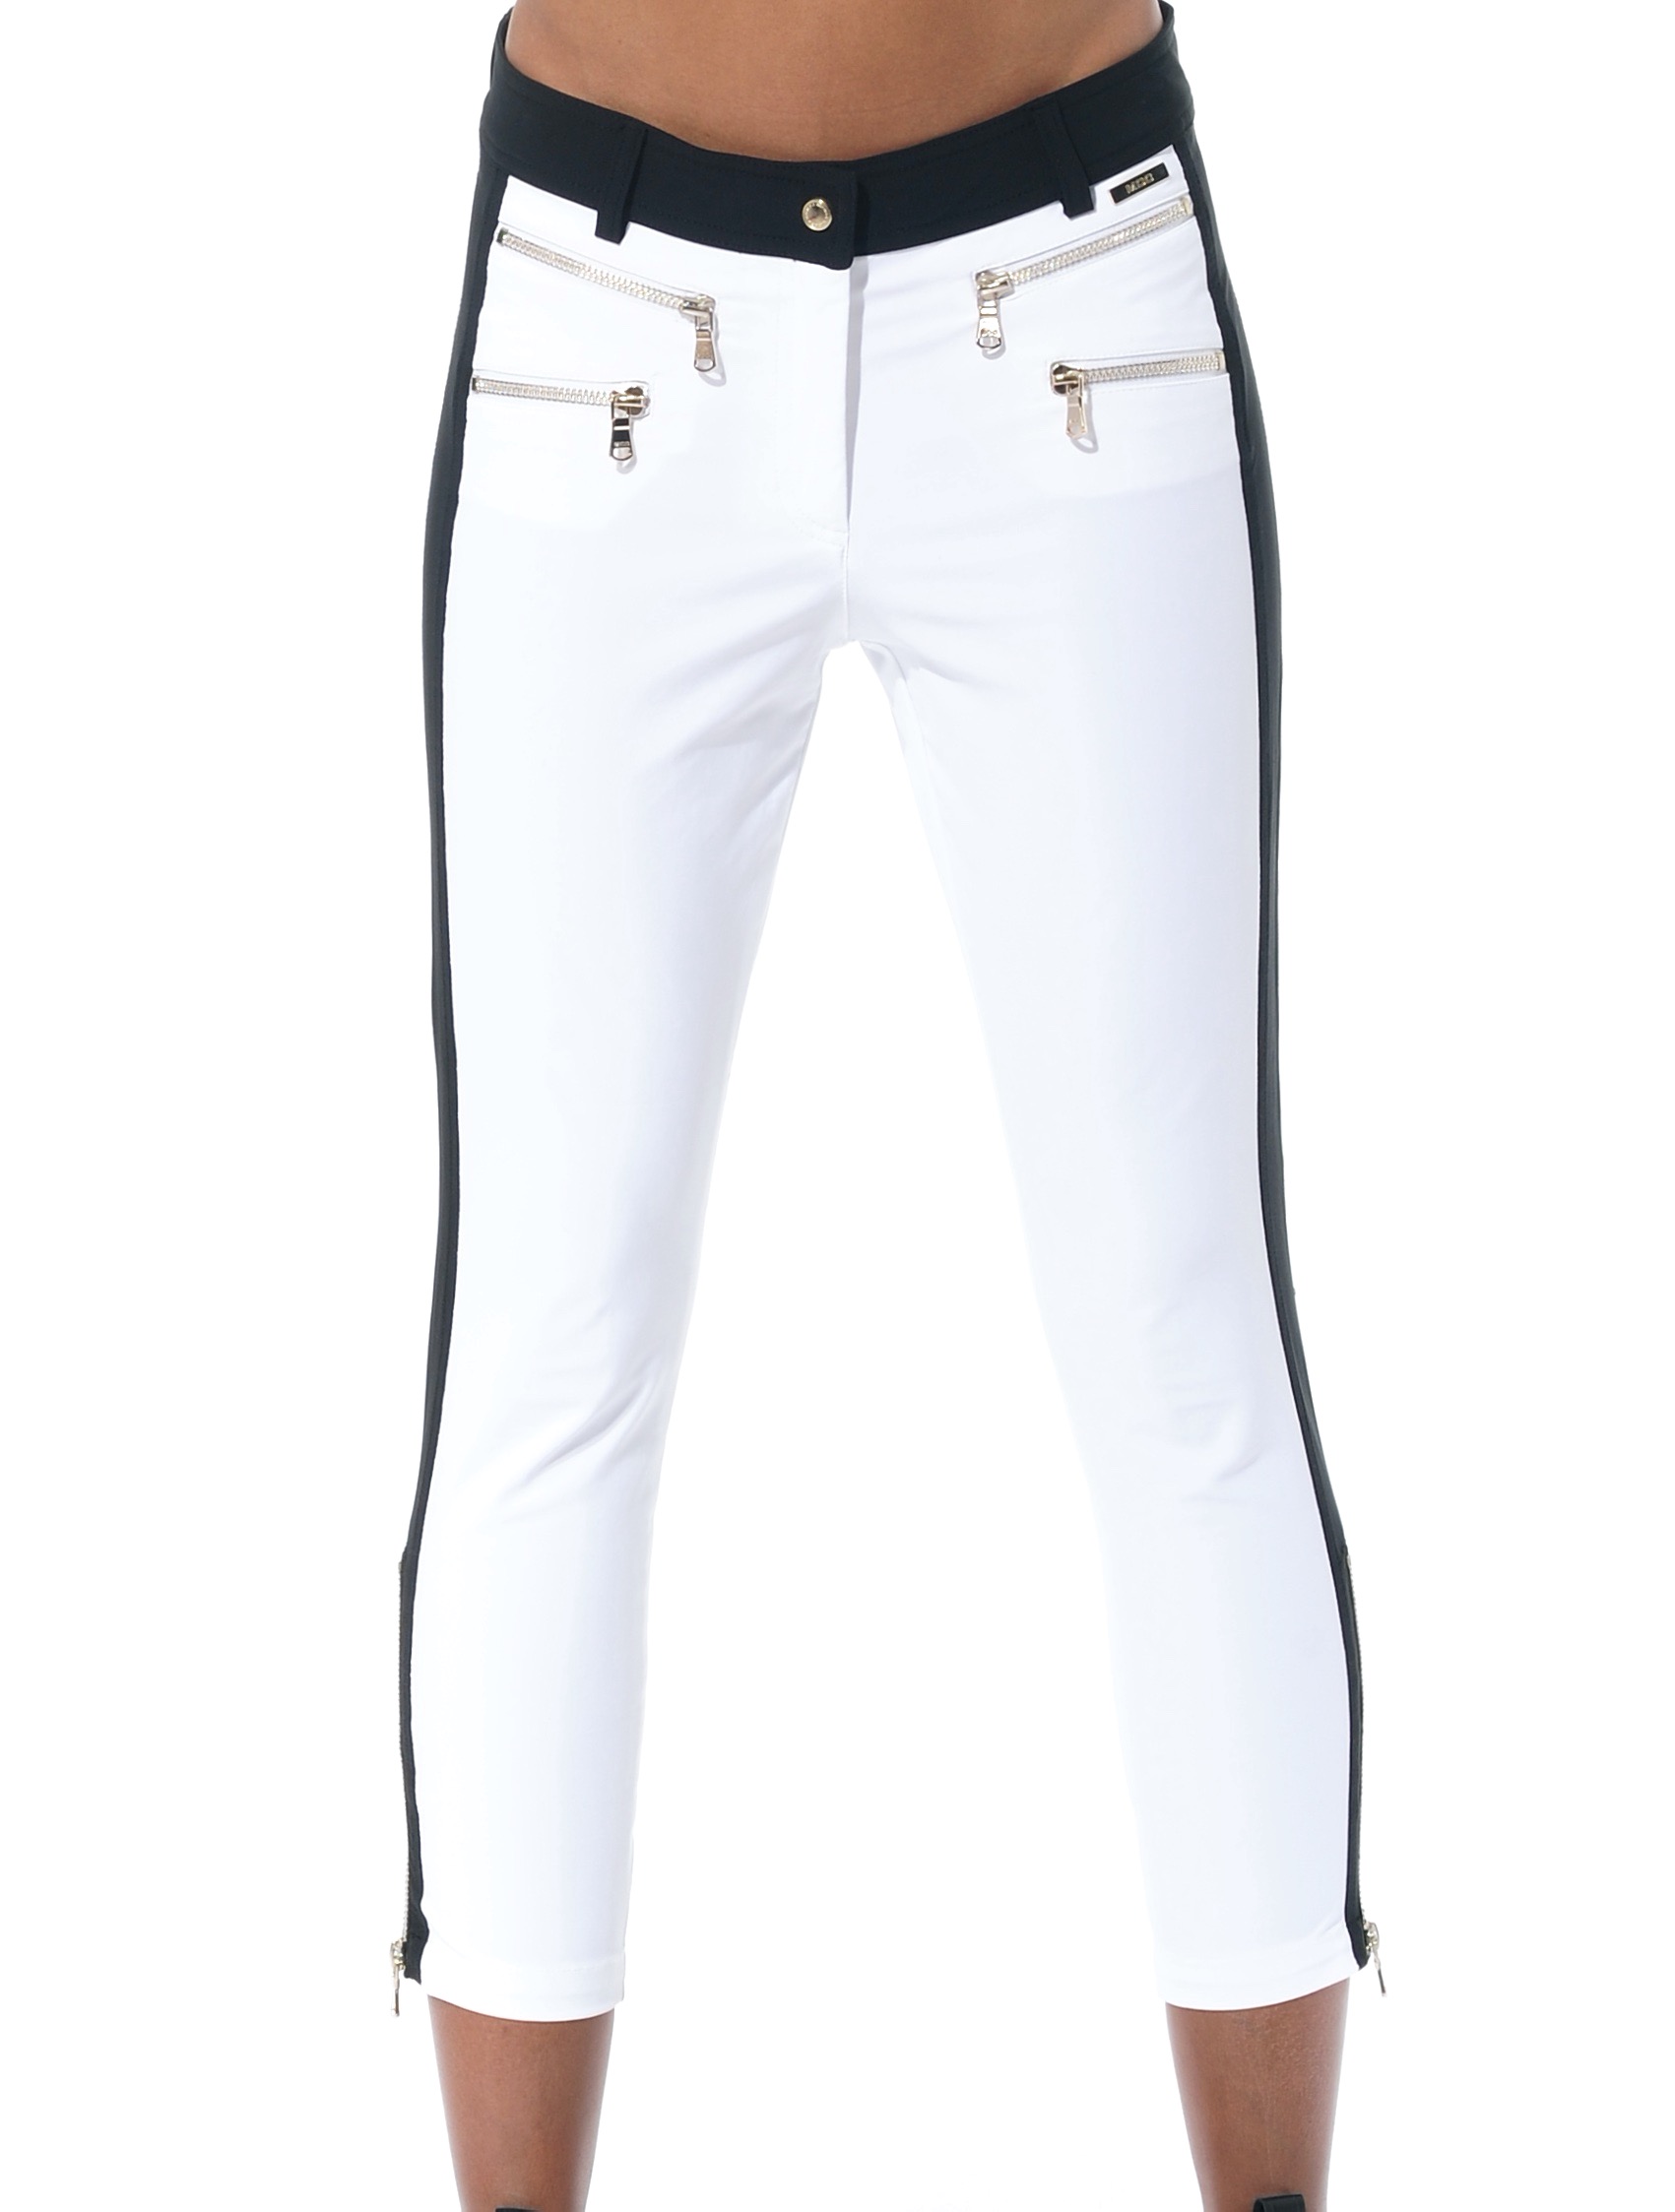 4way stretch double zip cropped pants white/black 